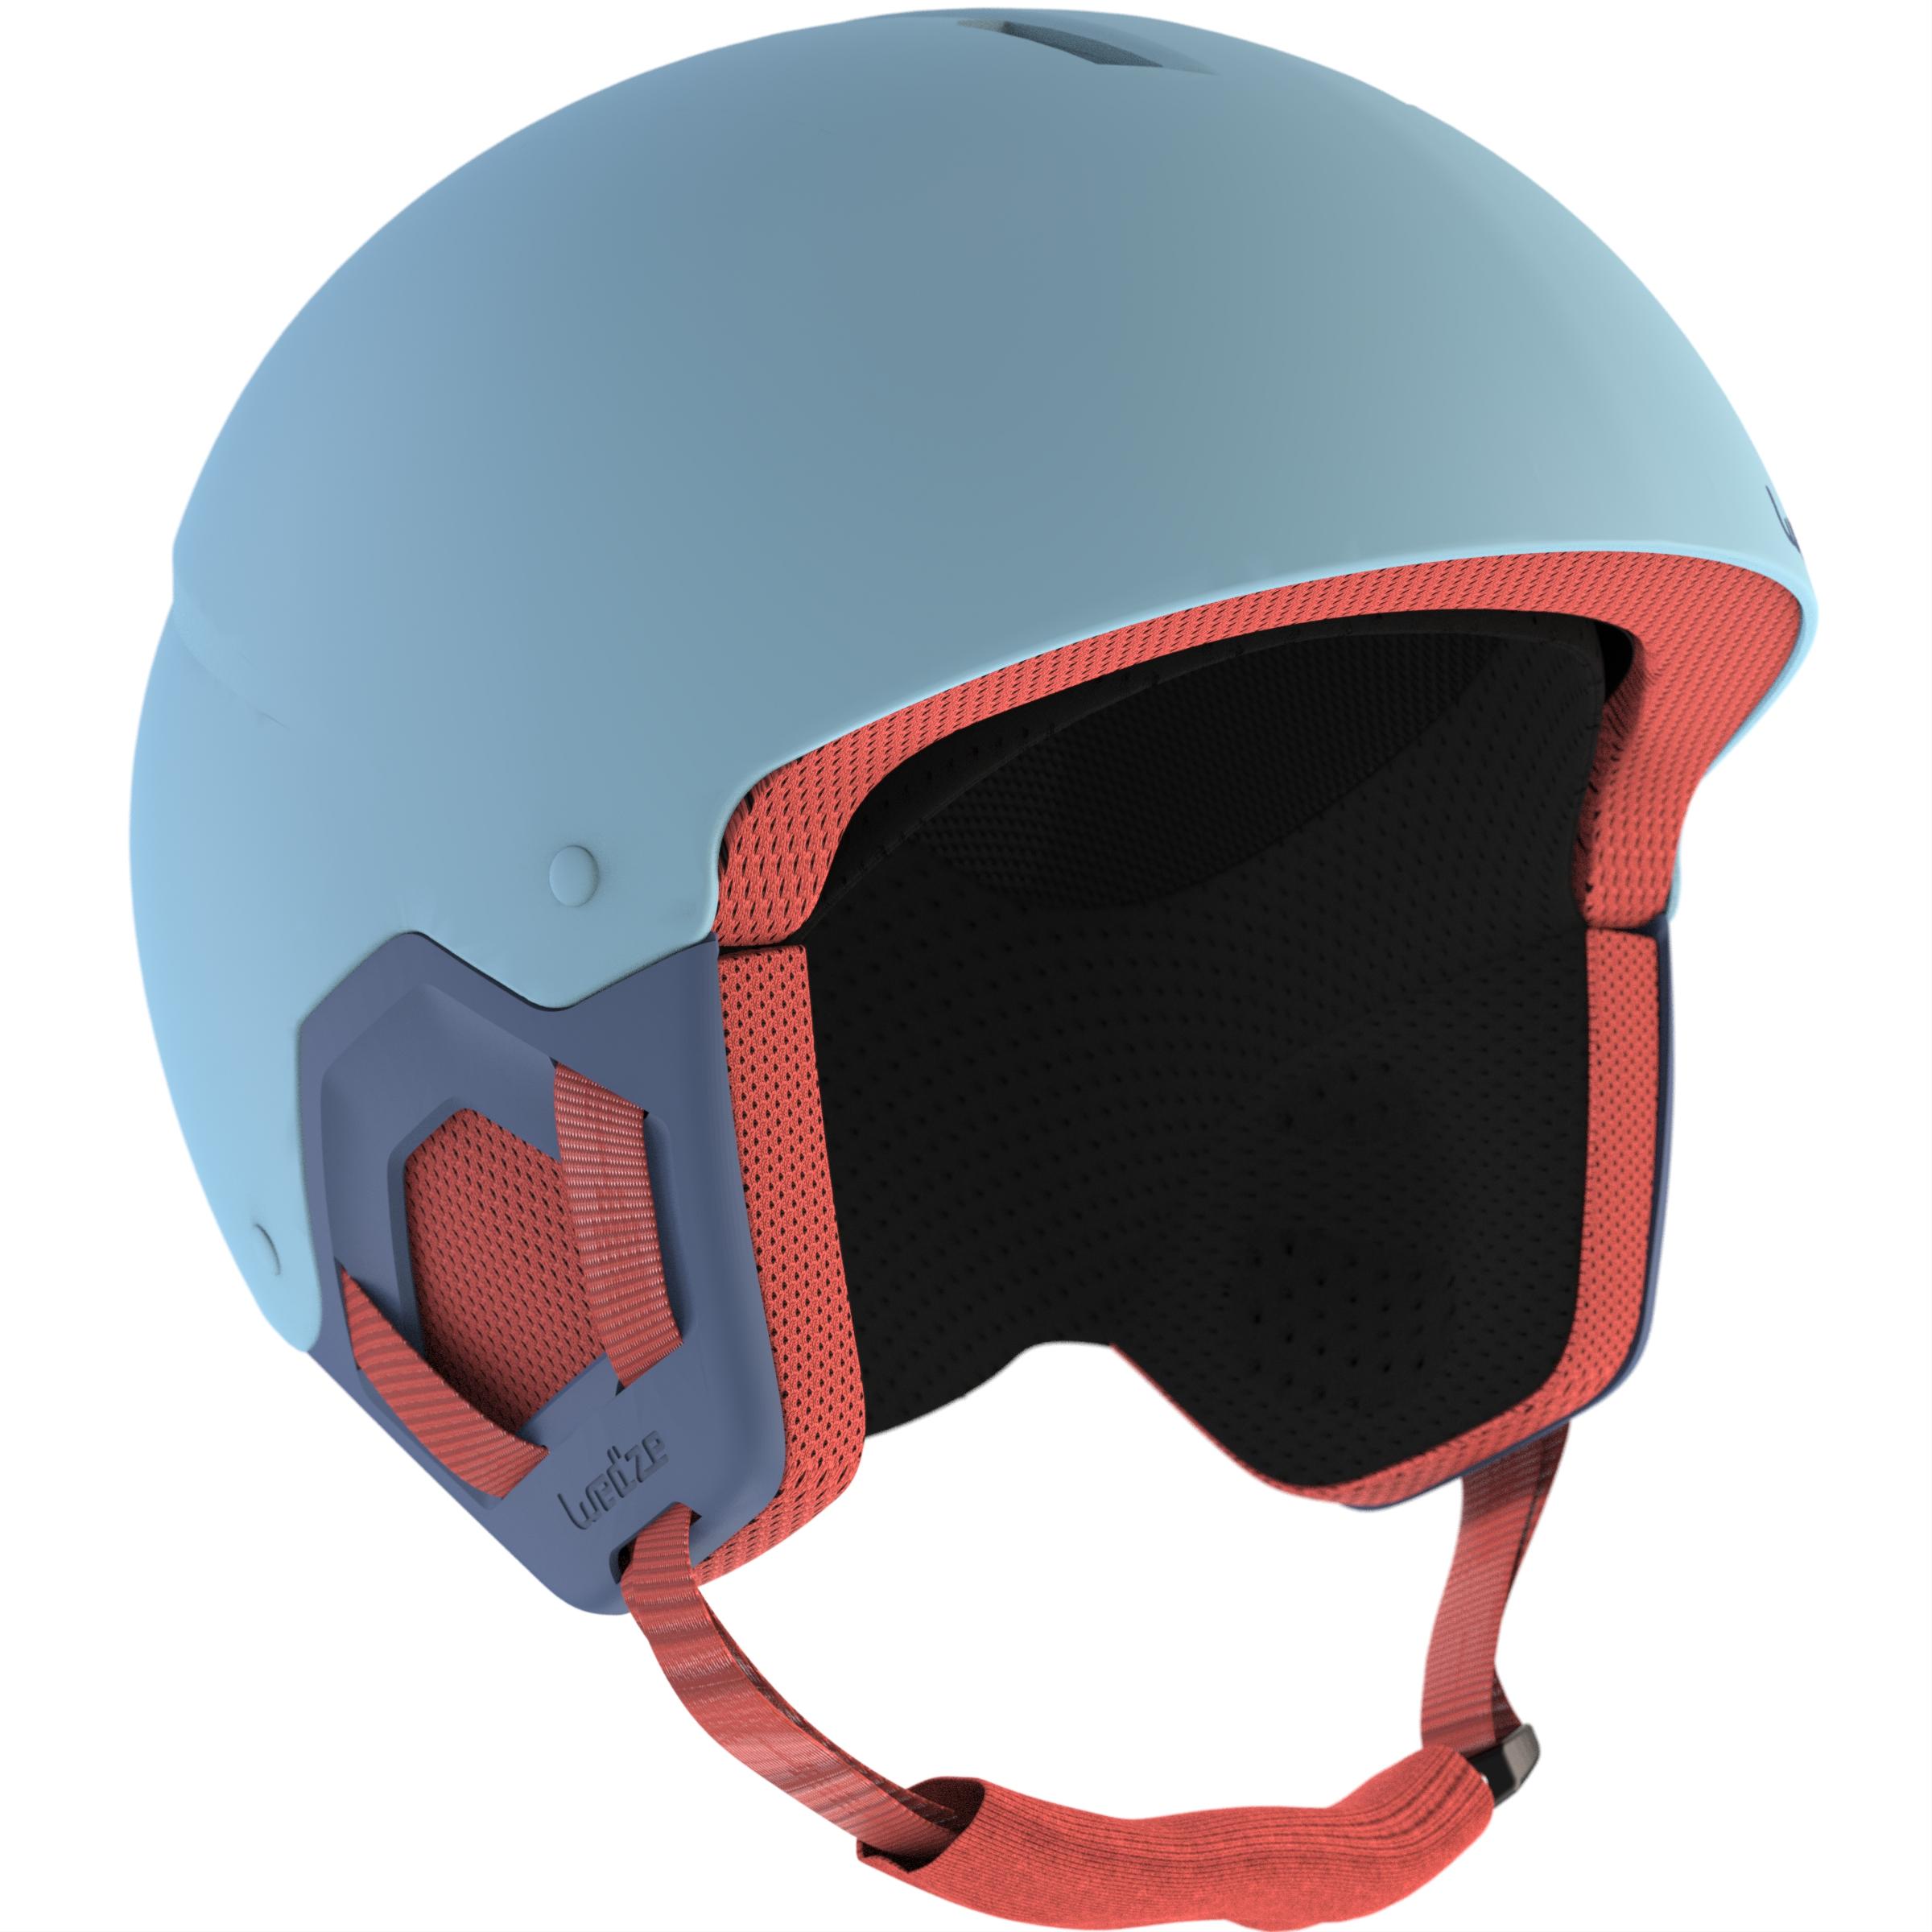 helmets in decathlon